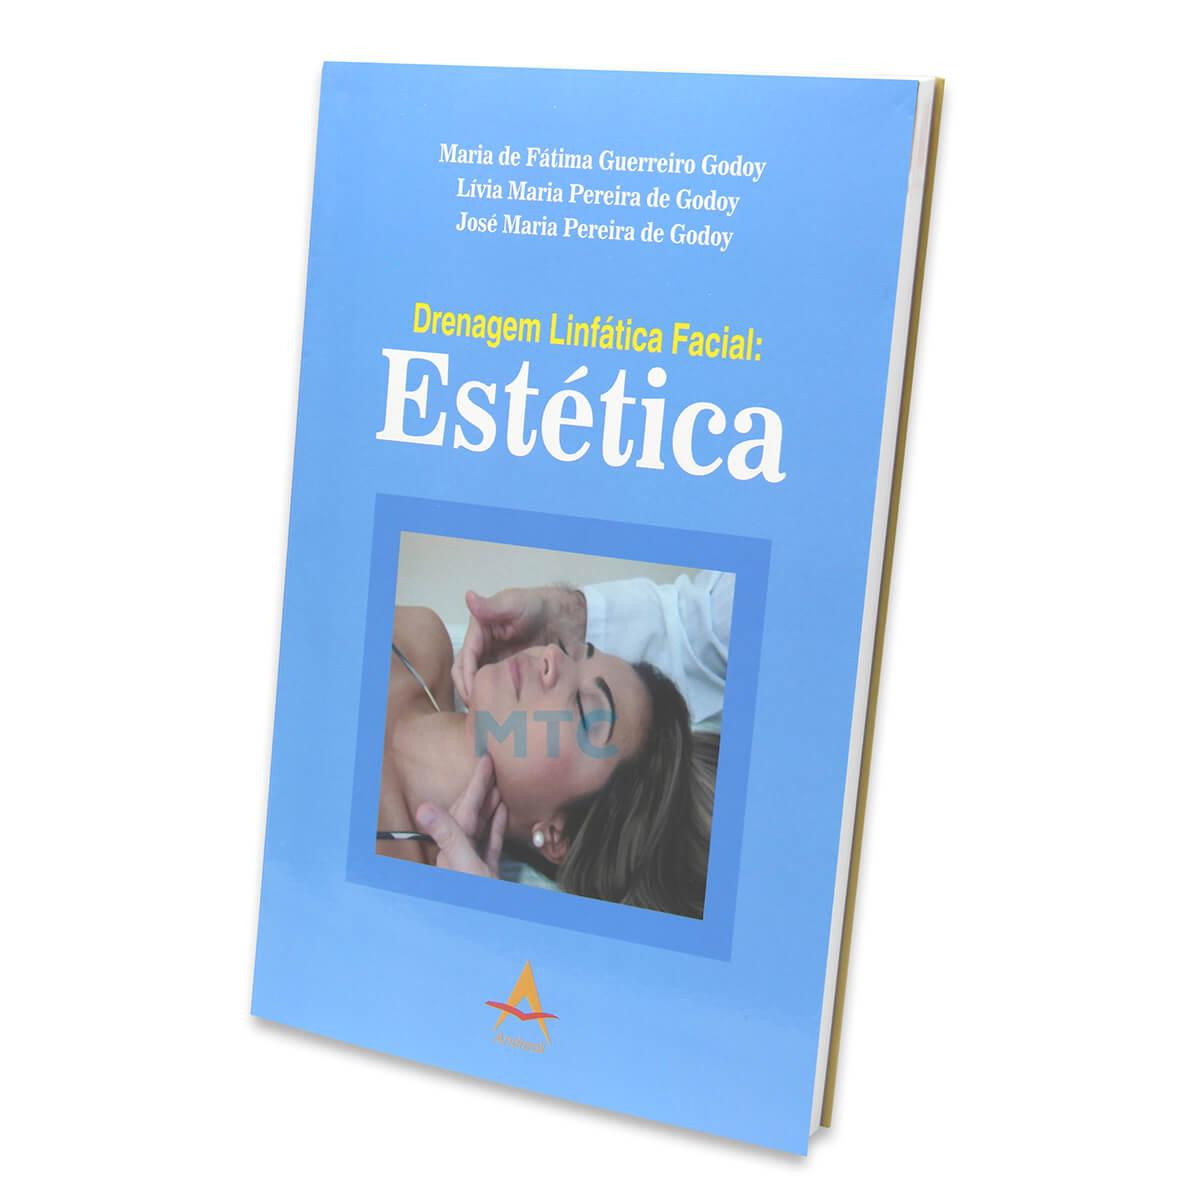 Drenagem Linfática Facial: Estética - Ed. Andreoli